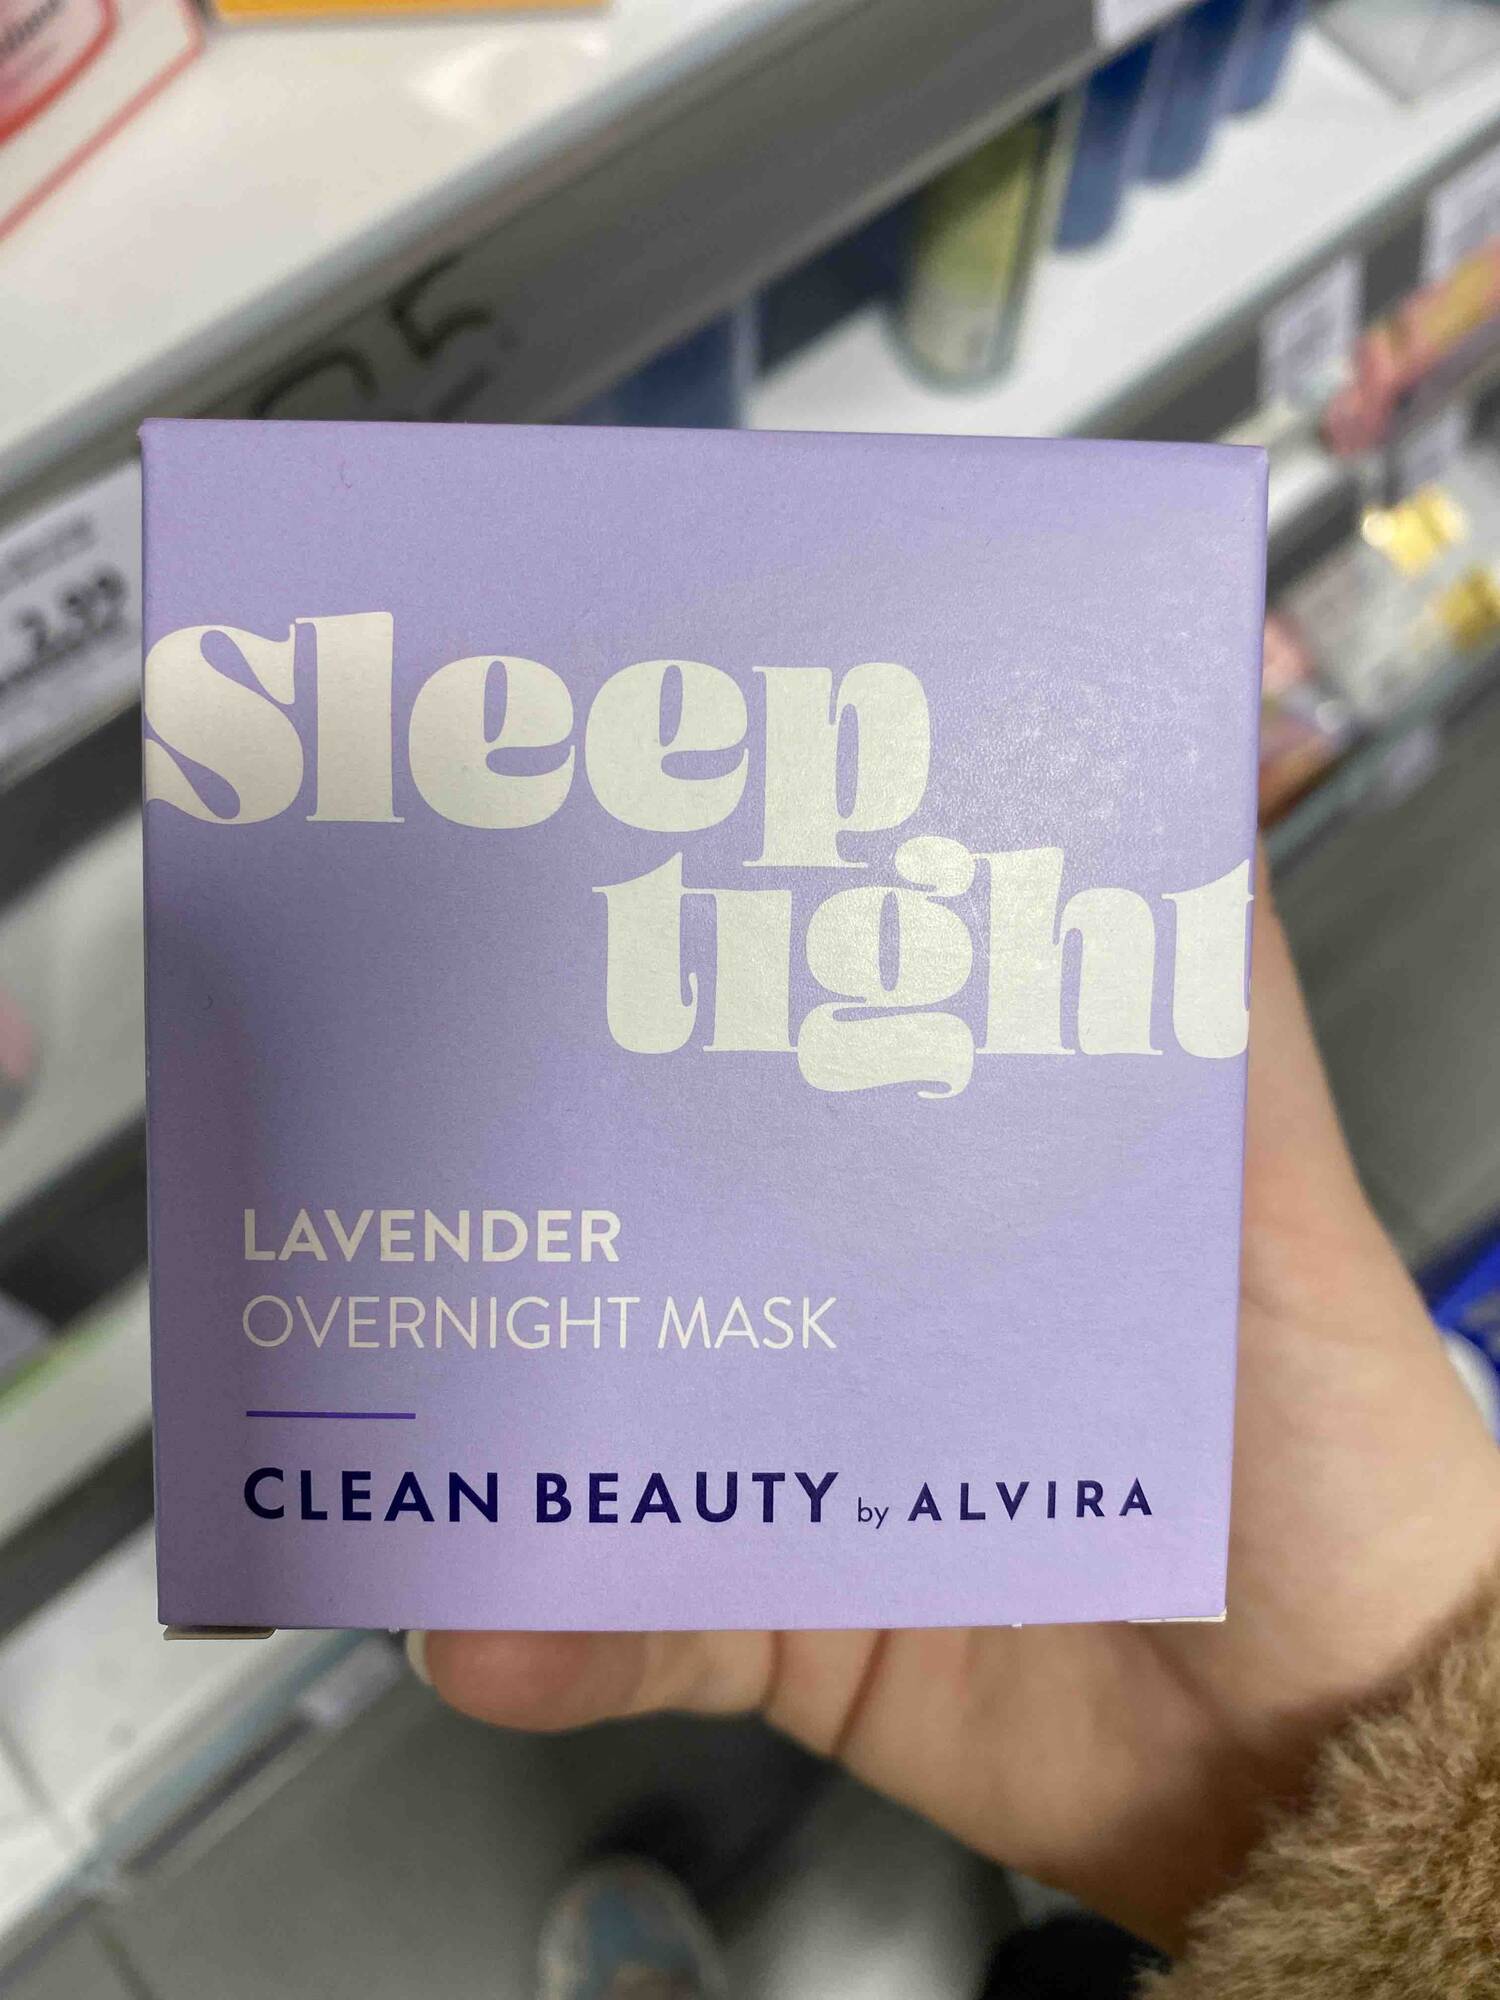 ALVIRA - Clean beauty Sleep tight - Lavender overnight mask